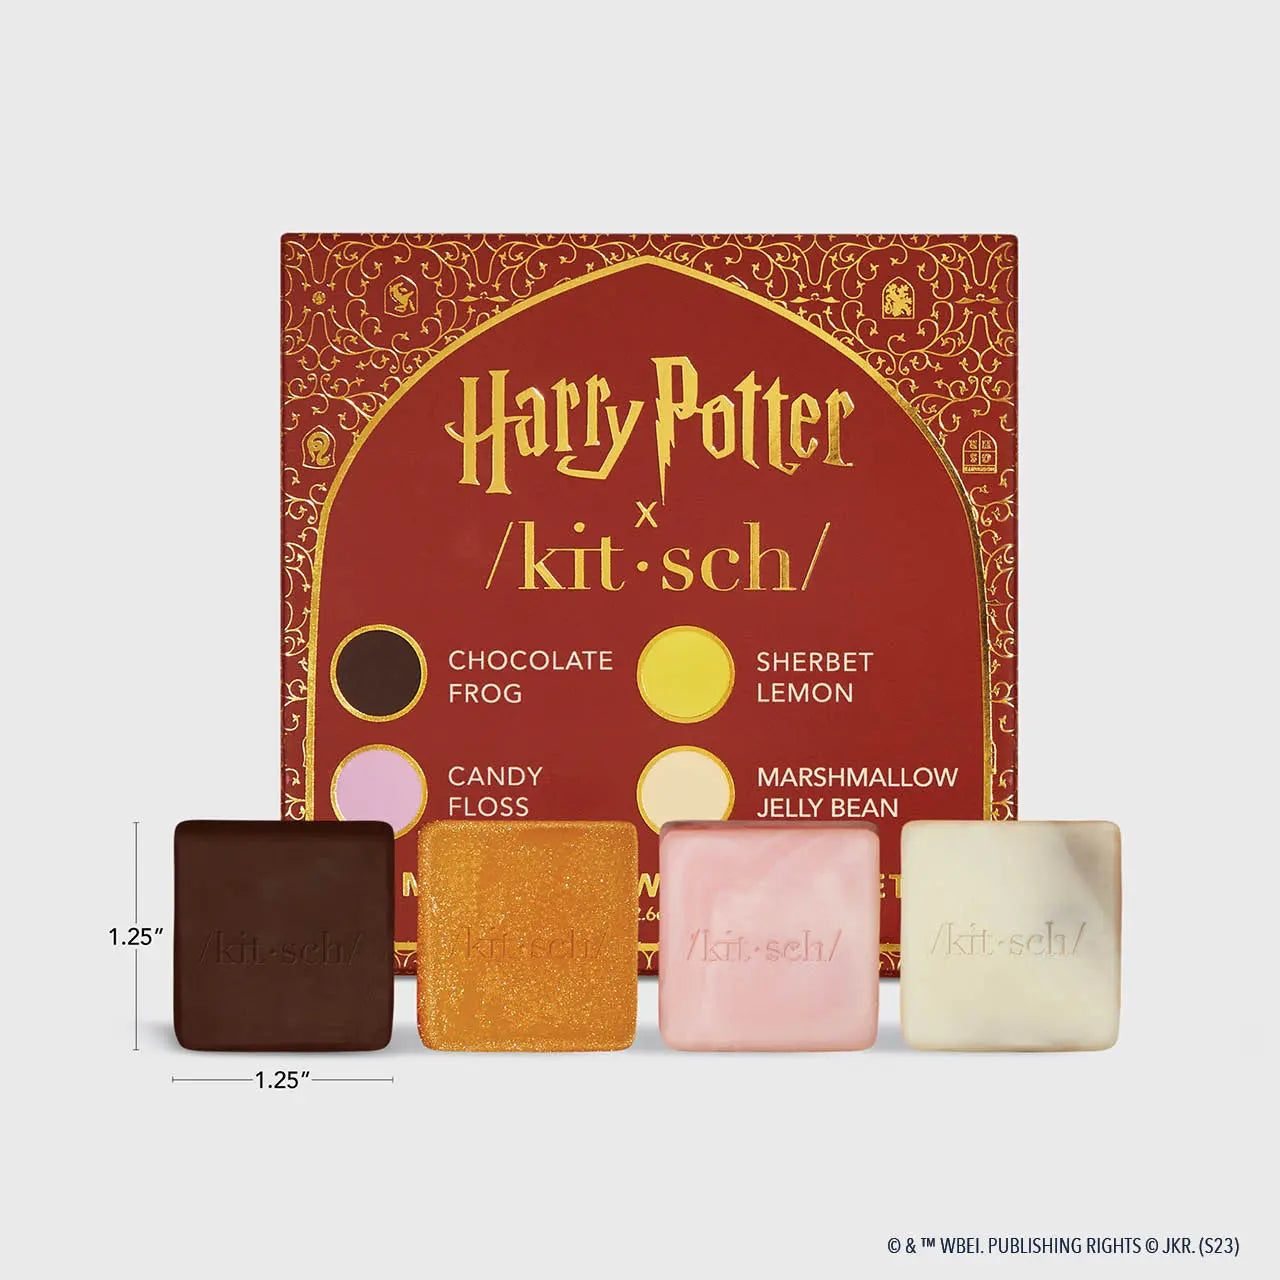 Kitsch - Harry Potter Body Wash 4pc Sampler Set